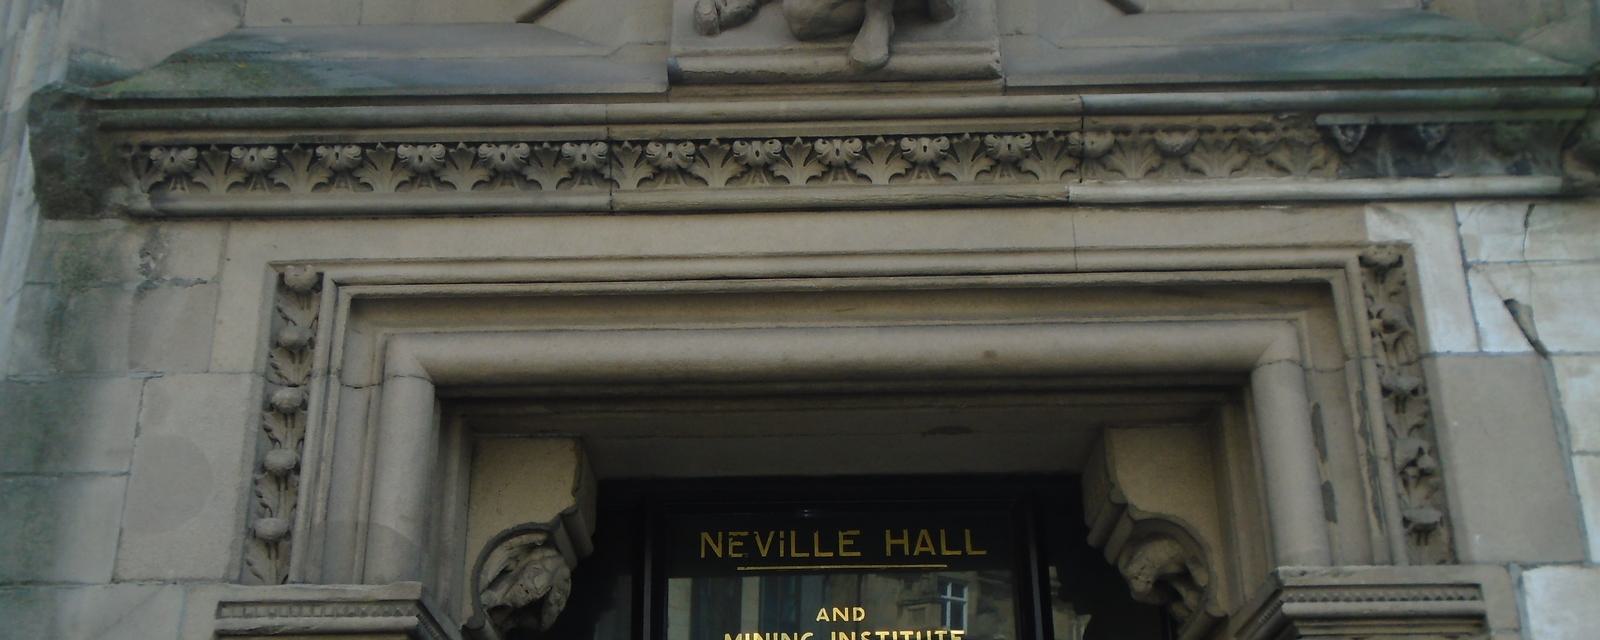 Institute of Mining Neville Hall